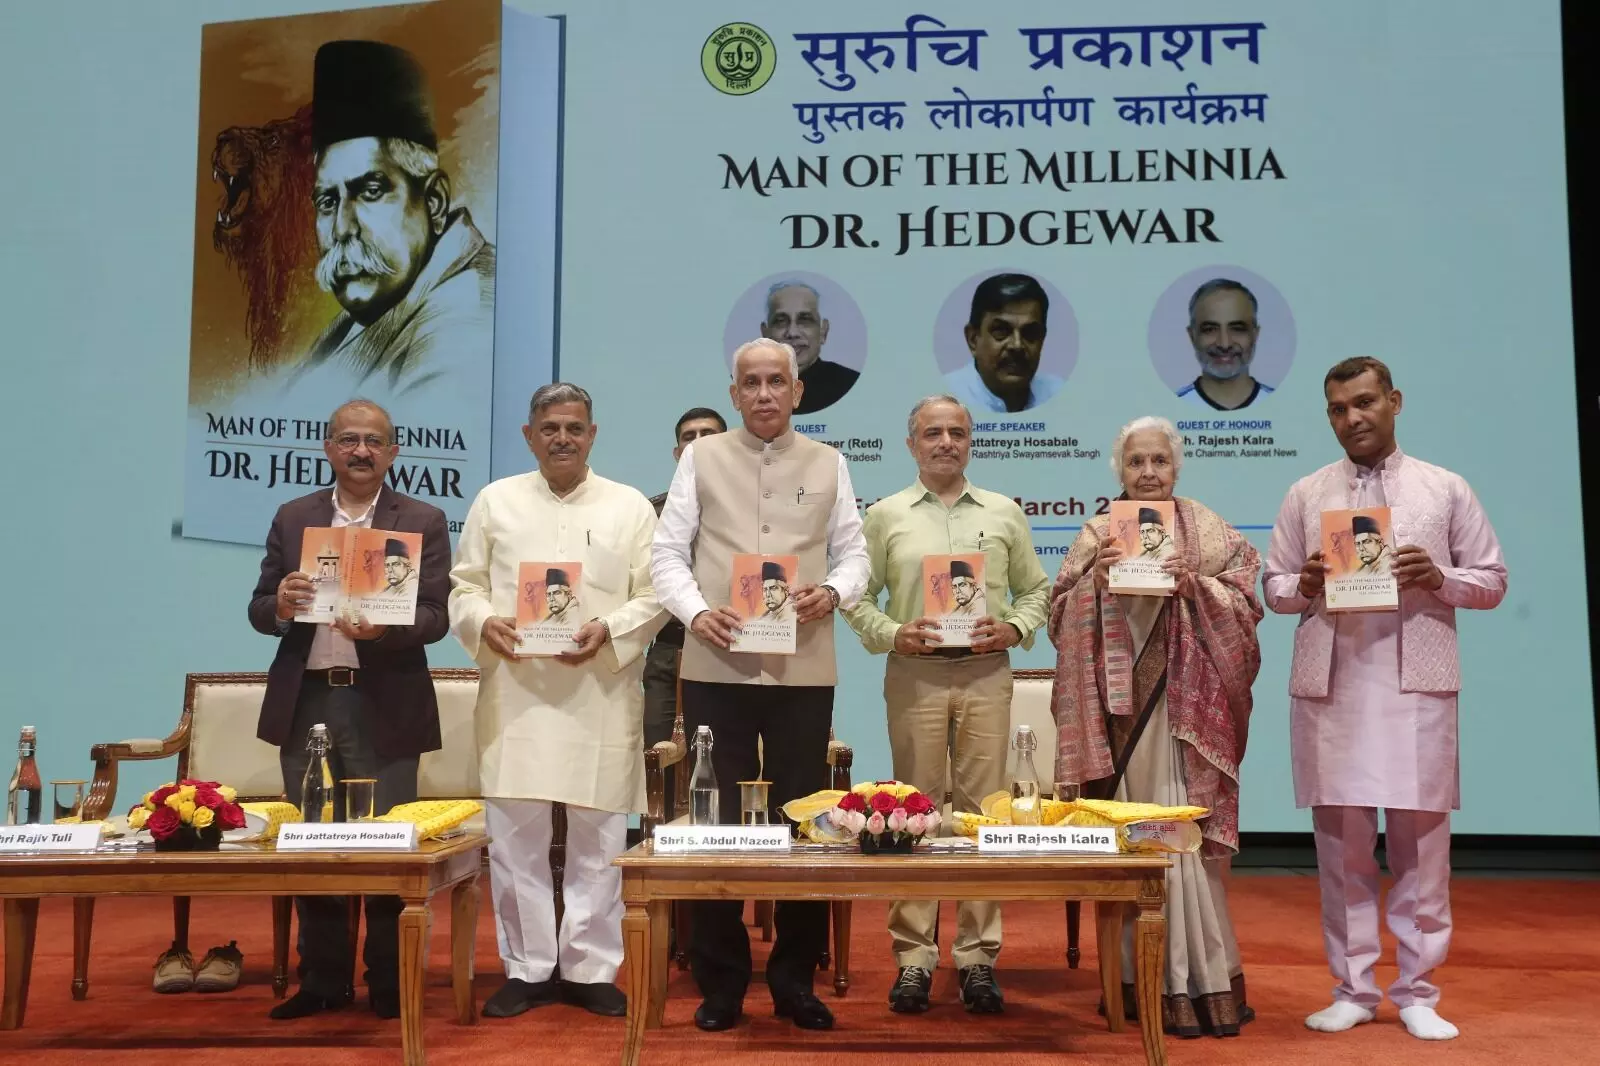 Dr. Hedgewar dedicated his entire life to the nation: Shri Dattatreya Hosabale